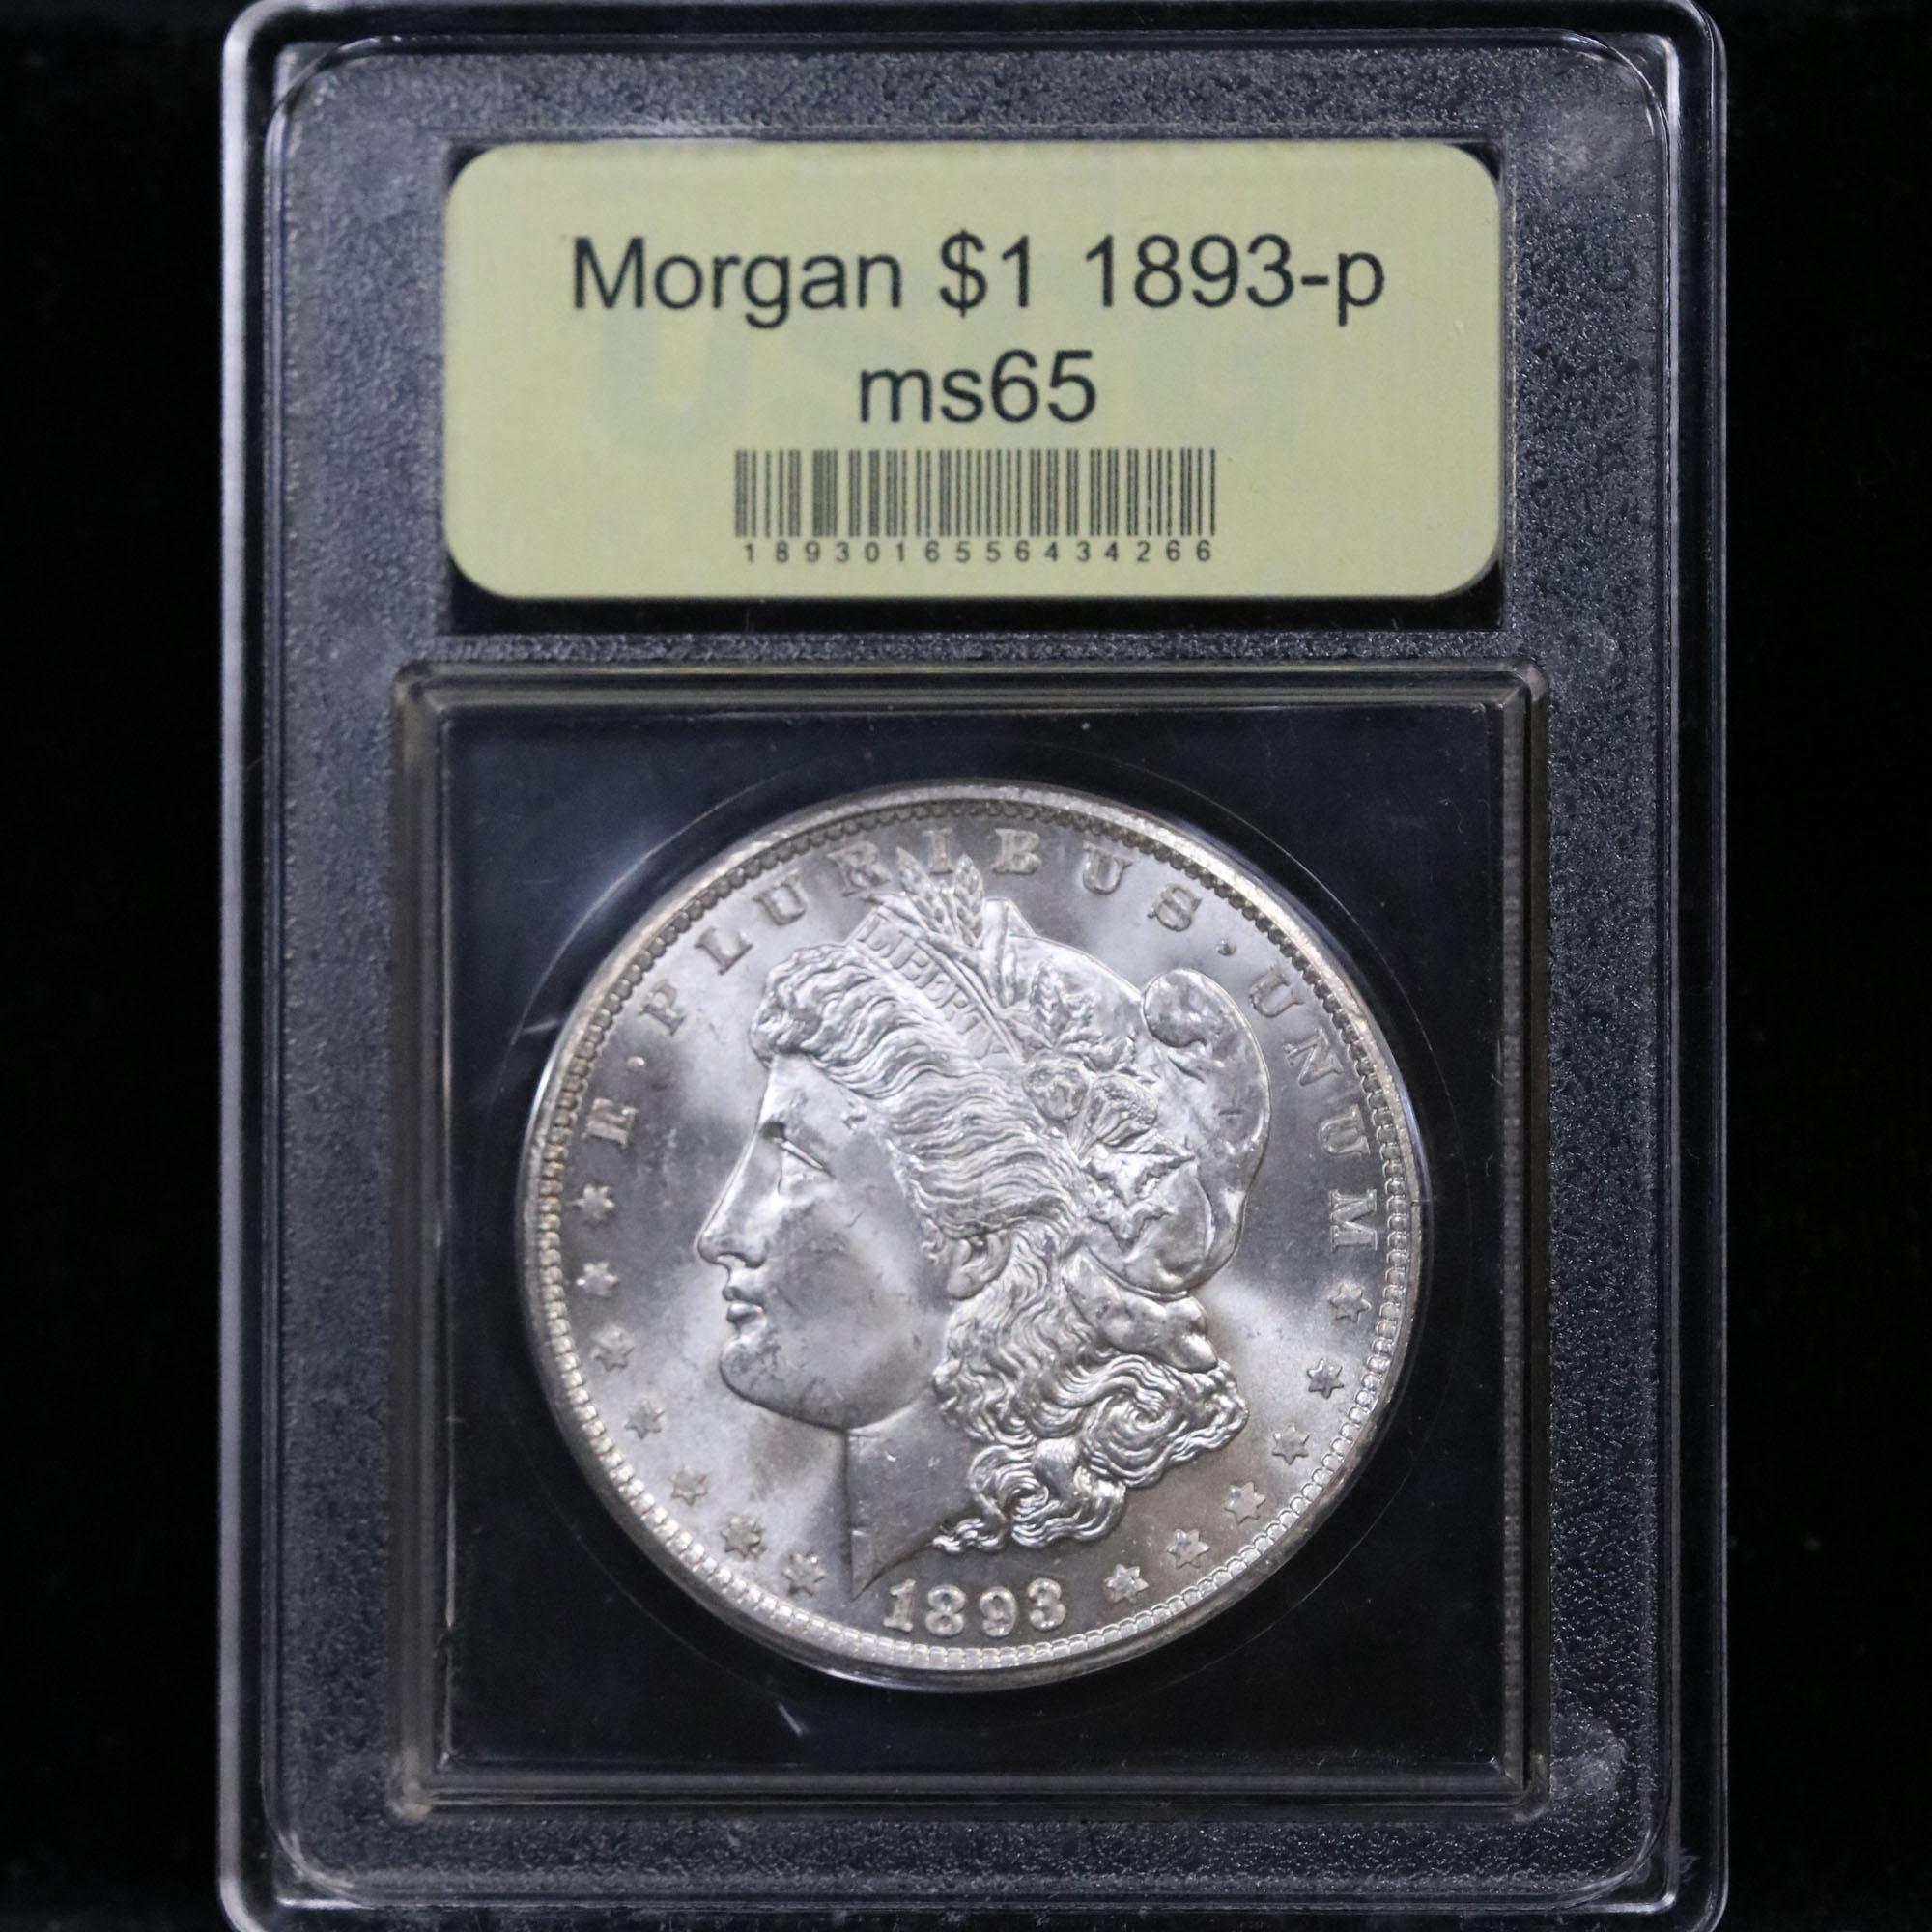 ***Auction Highlight*** 1893-p Morgan Dollar $1 Graded GEM Unc by USCG (fc)